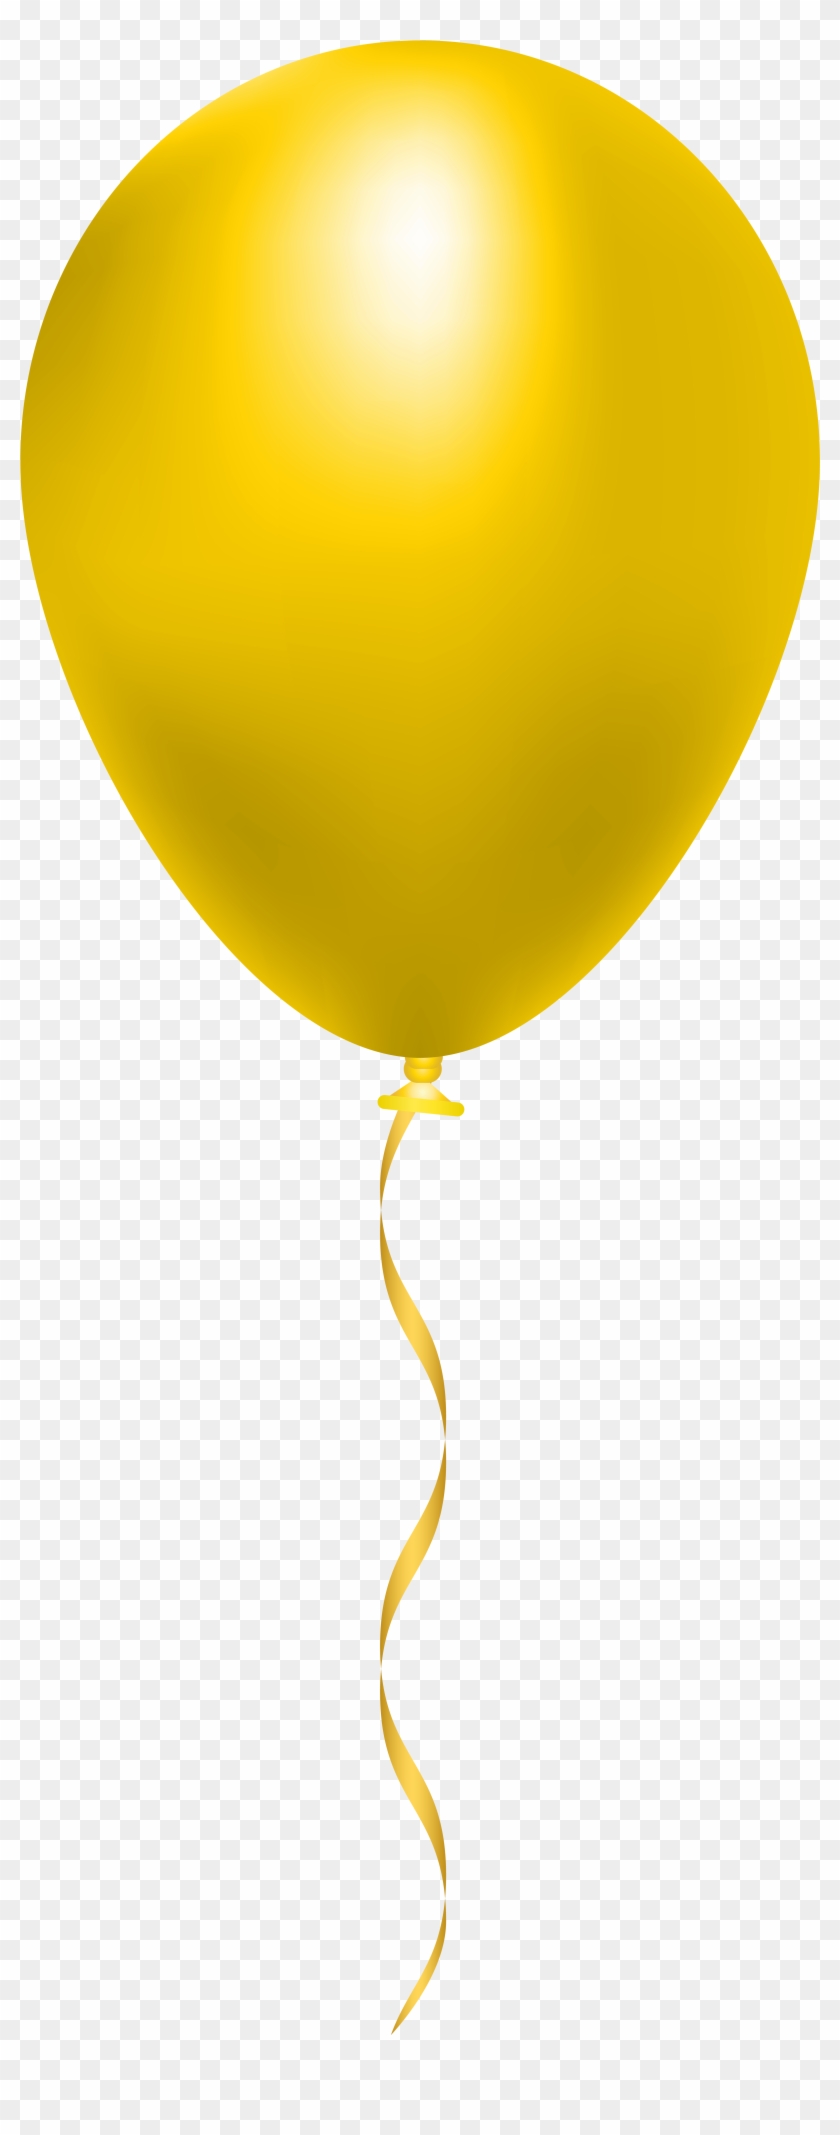 Ballons Transparent Yellow - Yellow Balloon Clipart Png #389845